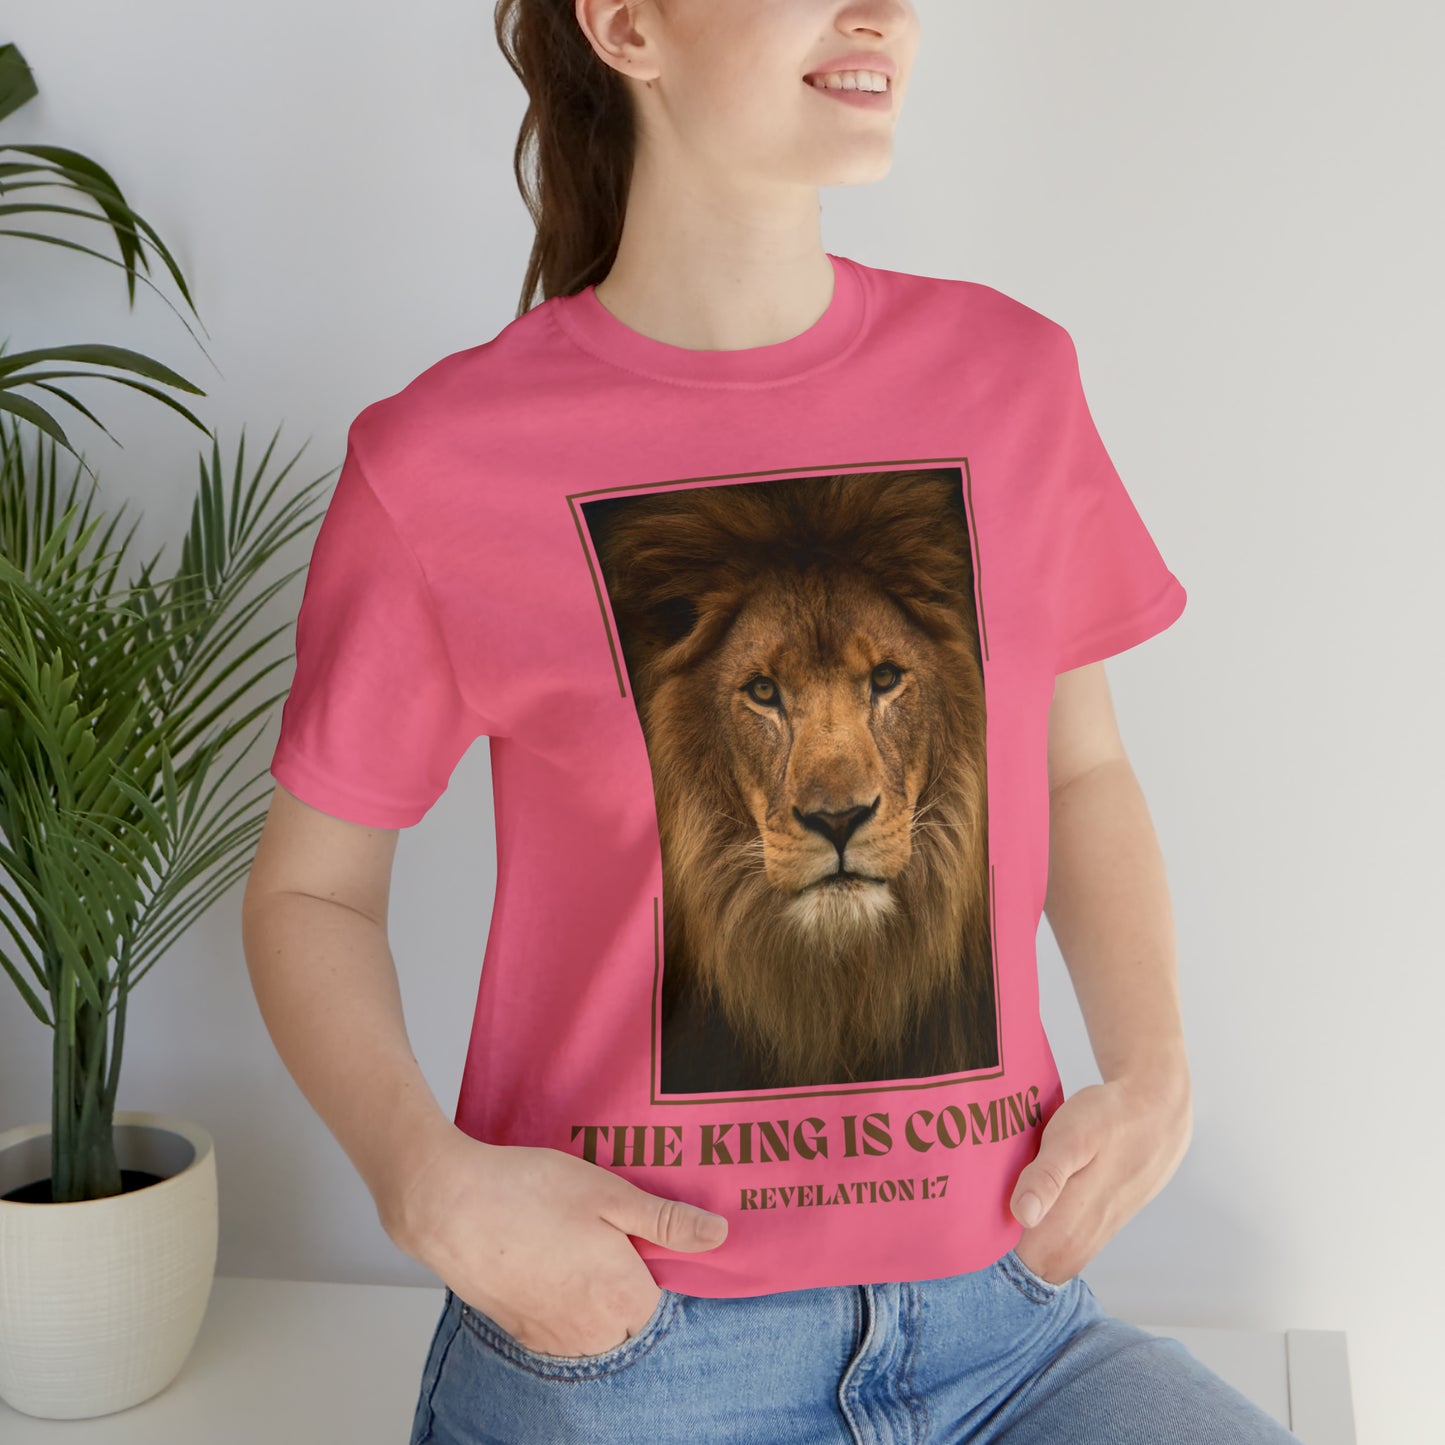 evangelism shirt christian lion